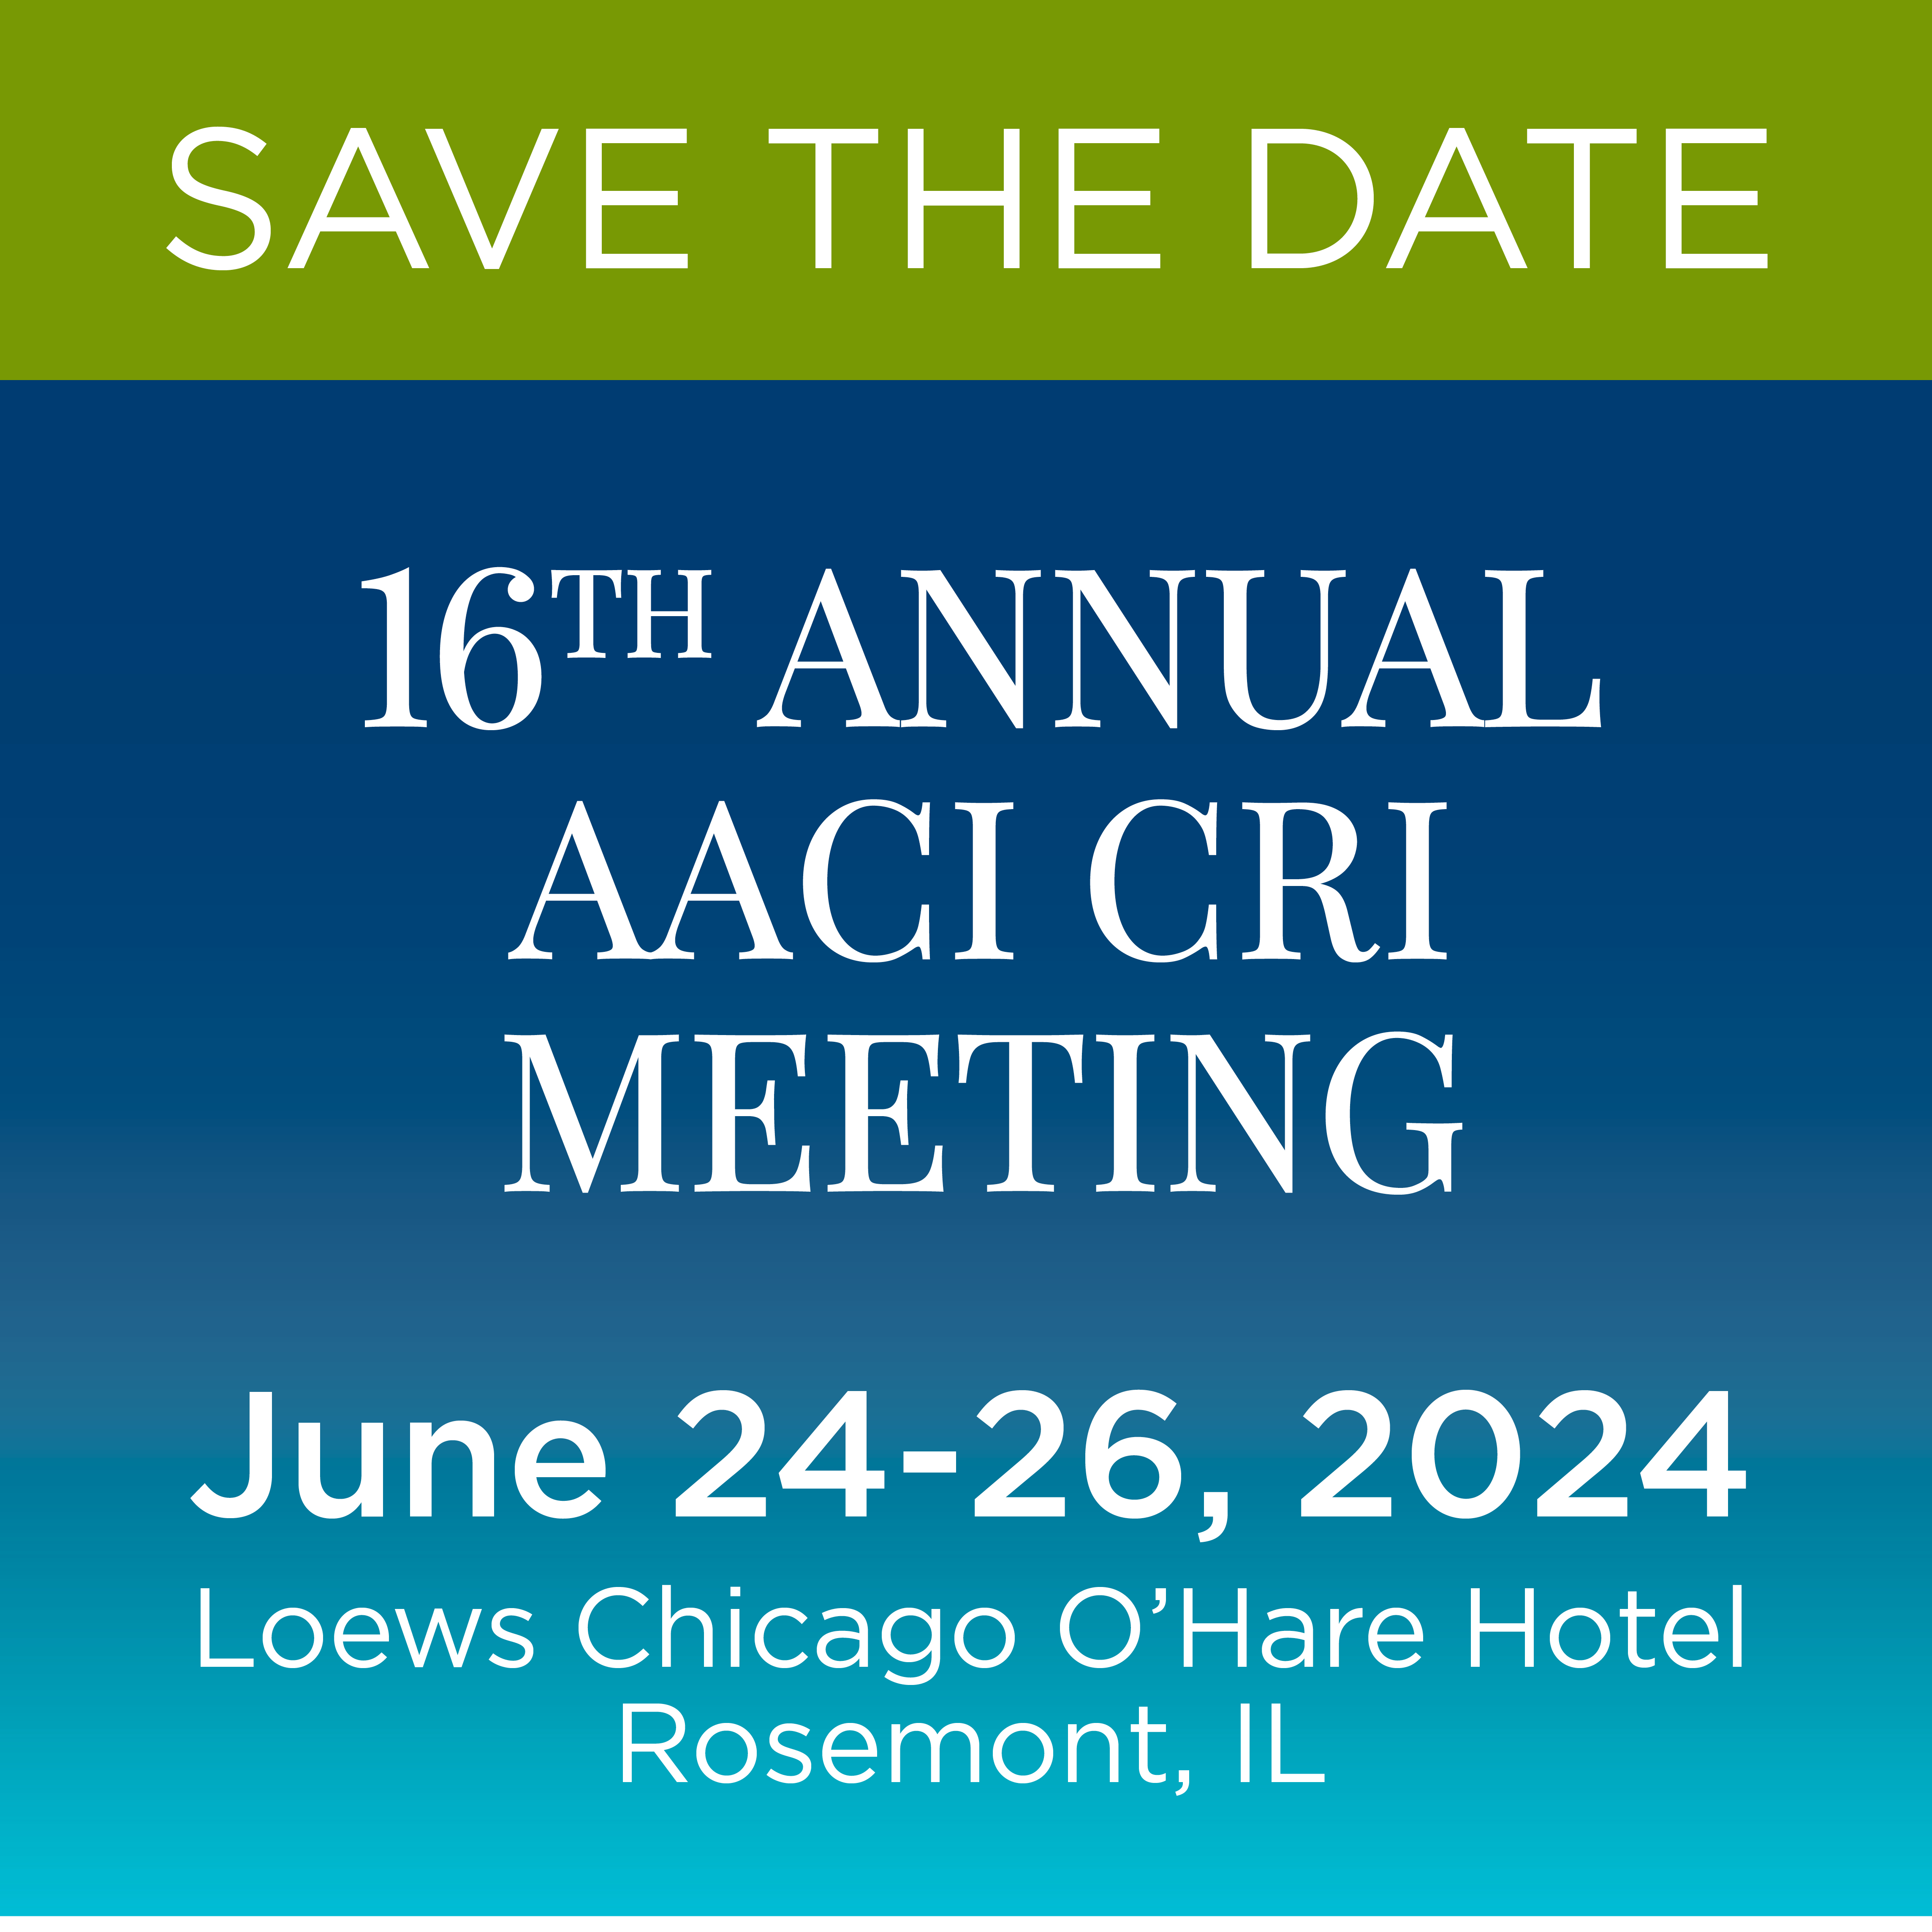 16th Annual AACI CRI Meeting, June 24-26, 2024